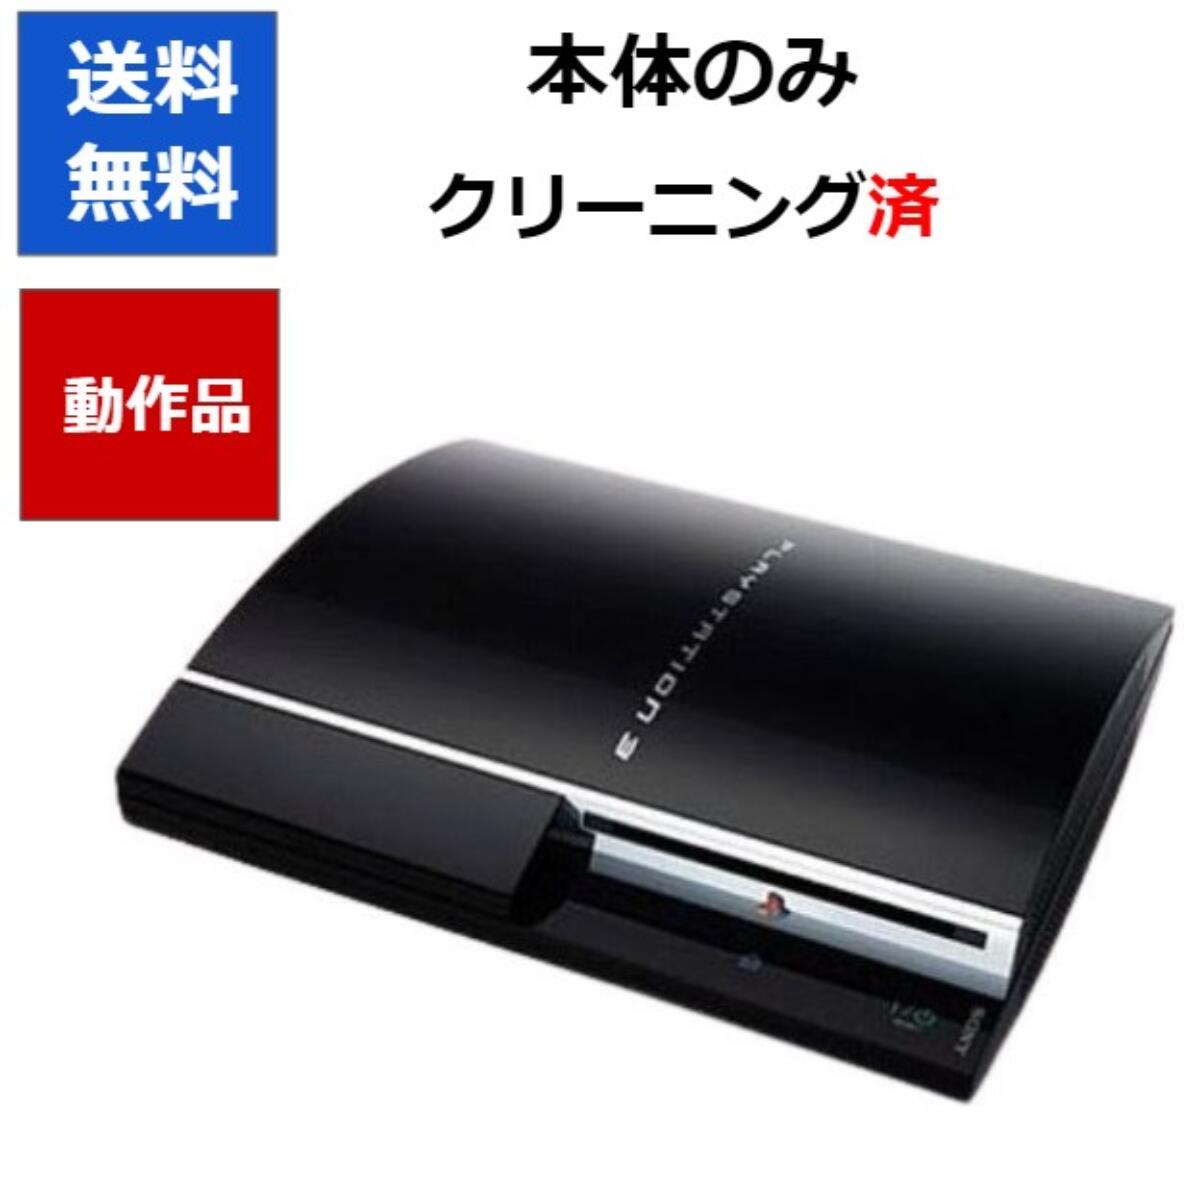 PS3 本体 プレステ3 本体のみ 20GB ブラック 初期型 SONY 